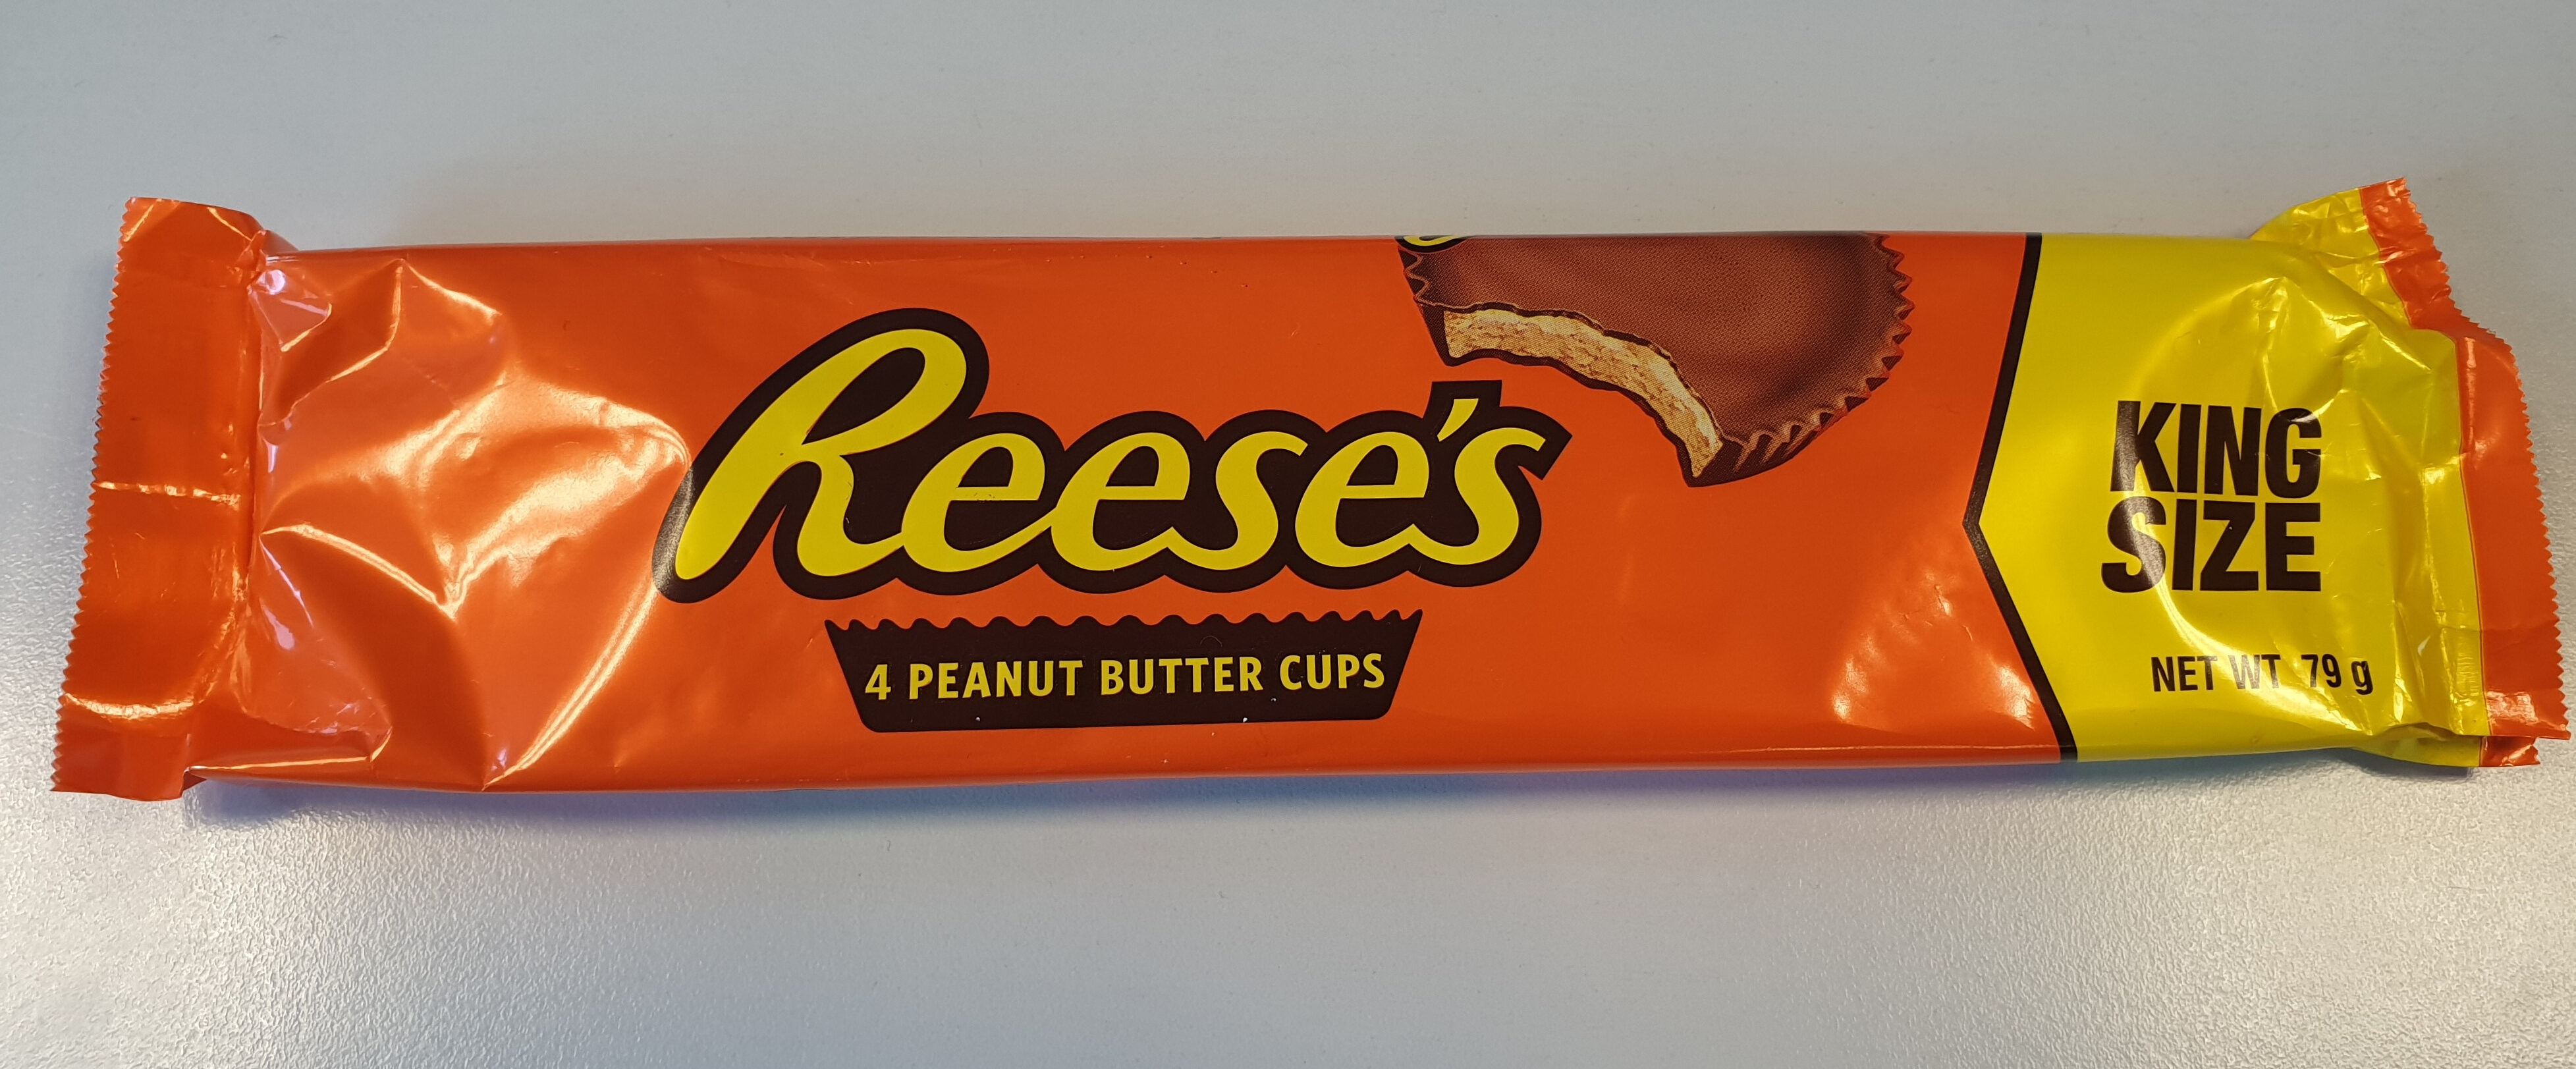 Reese's Peanut Butter Cups 4er King Size - Produit - en